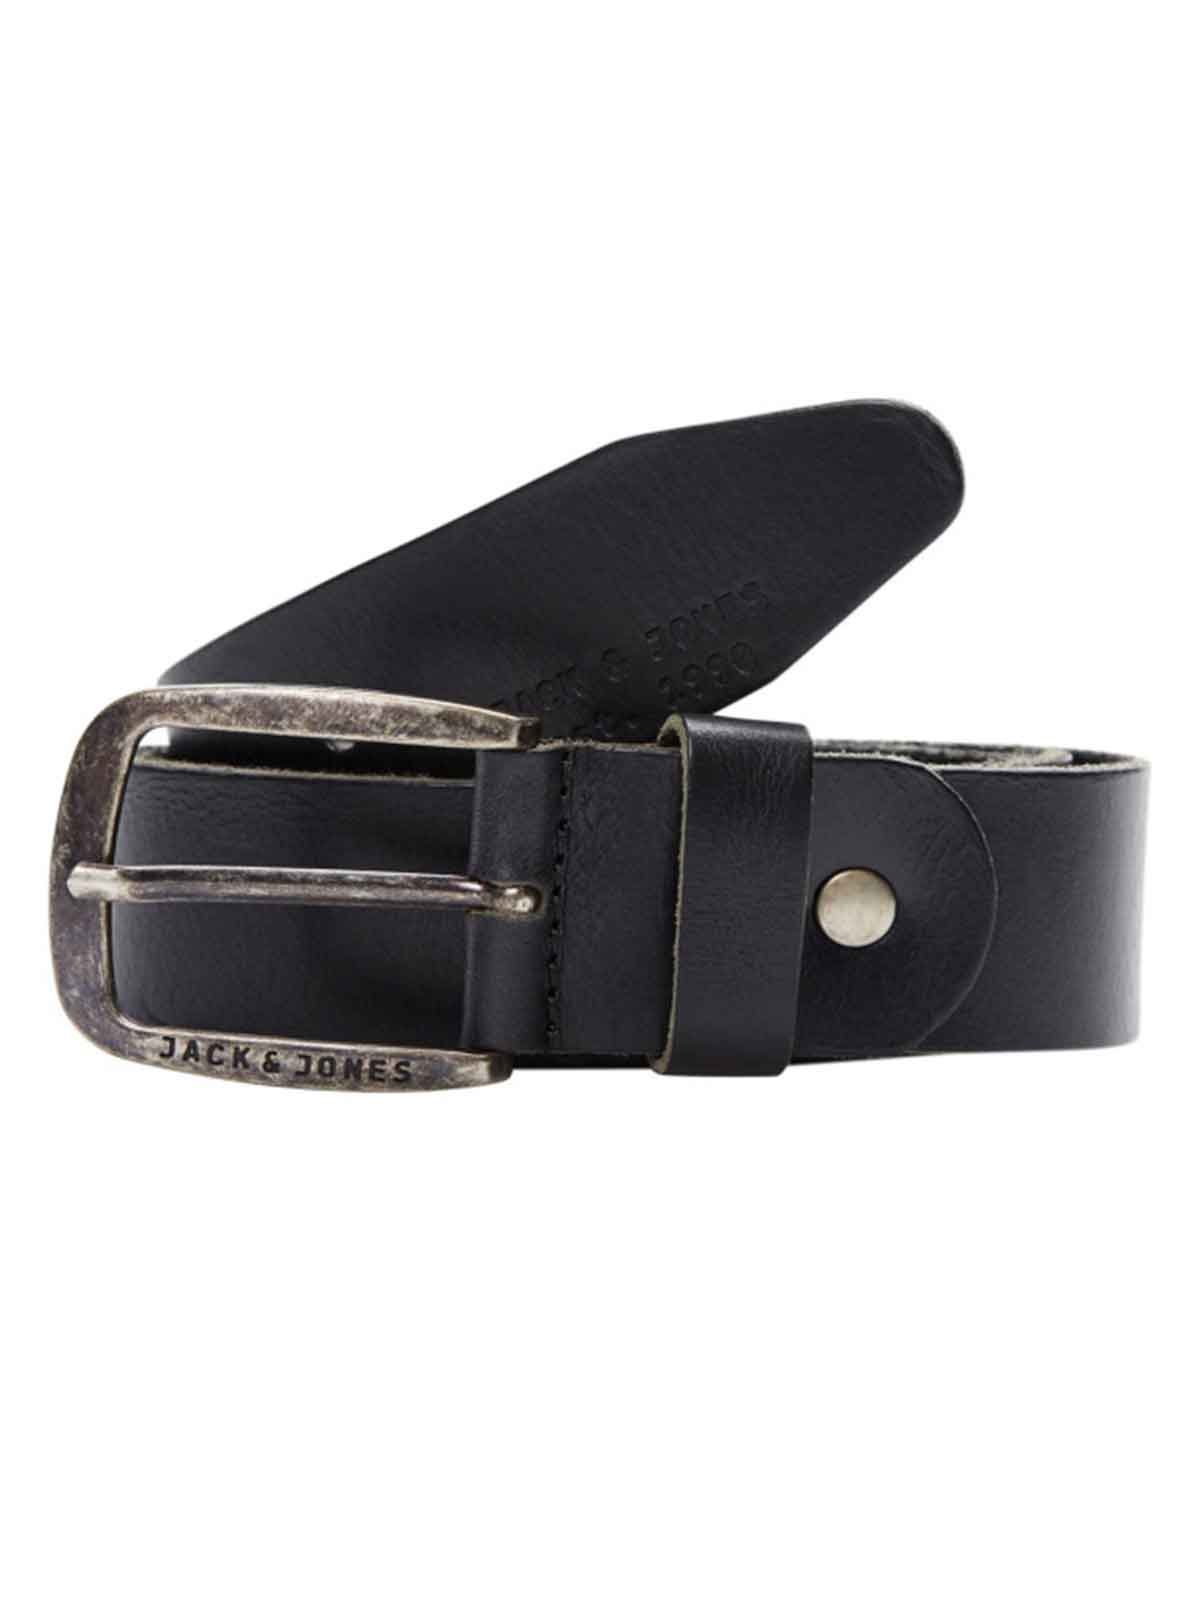   Jack & Jones | Paul Leather Belt |  